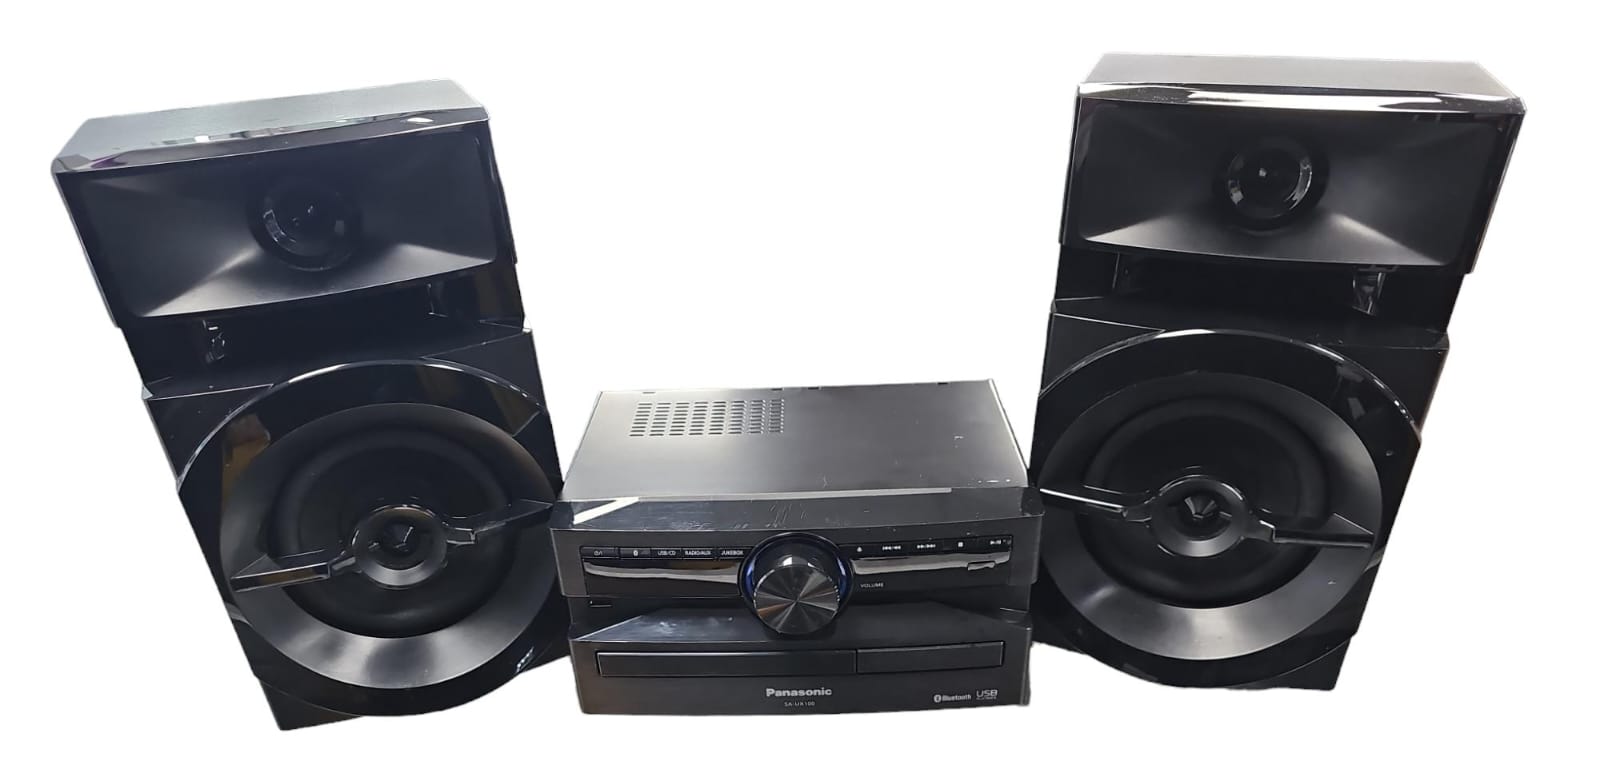 Panasonic SA-UX100 stereo system